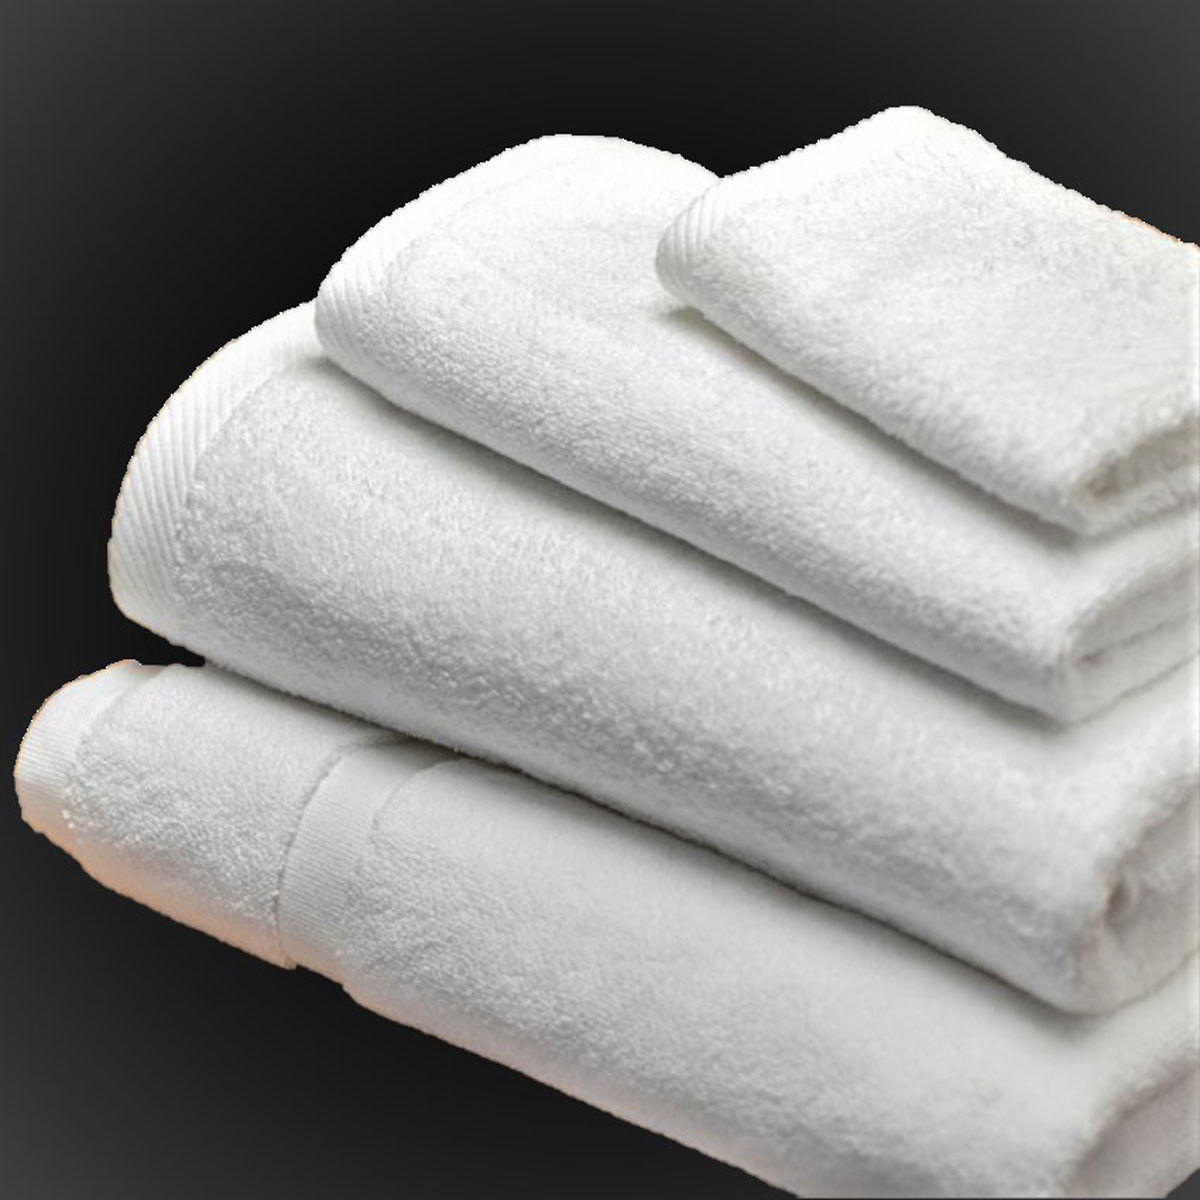 Are bulk bath towels wholesale suitable for the hospitality market?